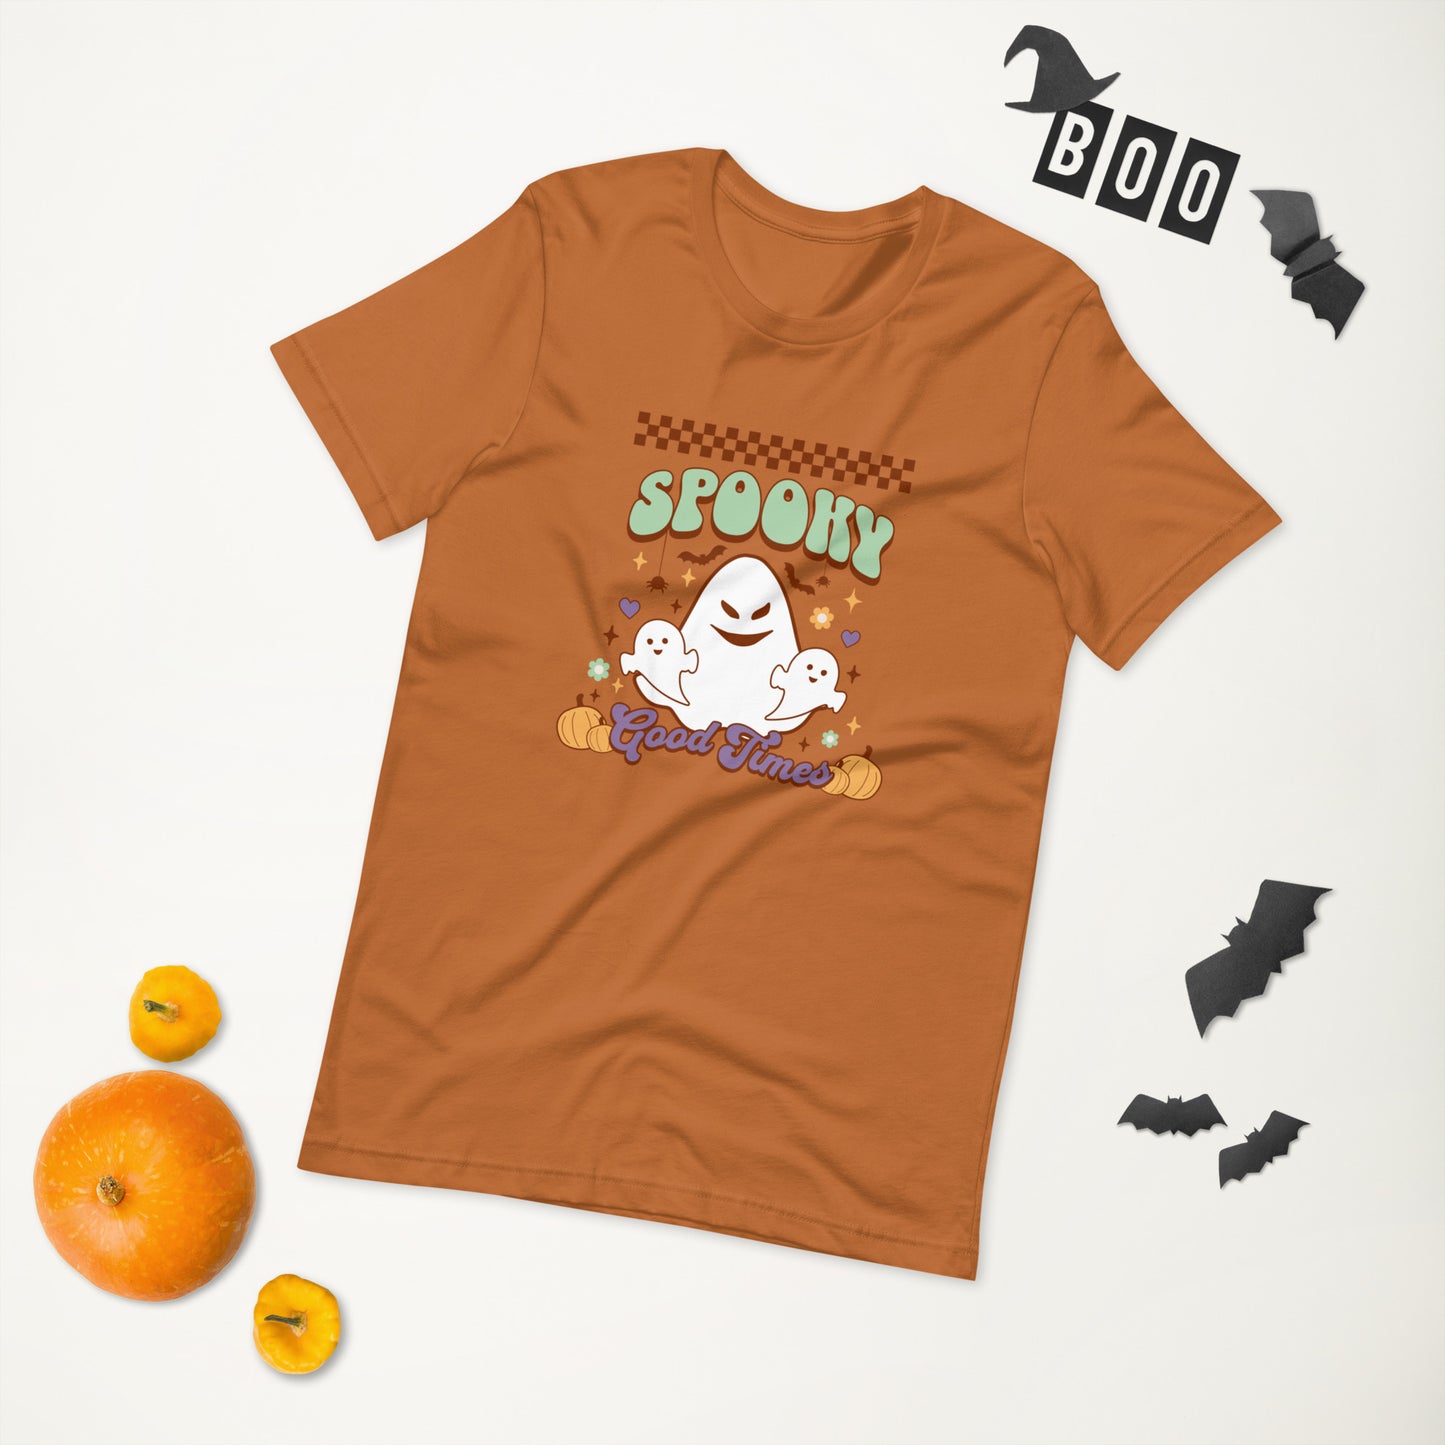 ADULT "Spooky Good Times" 3 Ghost Checkerboard Retro Cute Halloween Unisex t-shirt tshirt